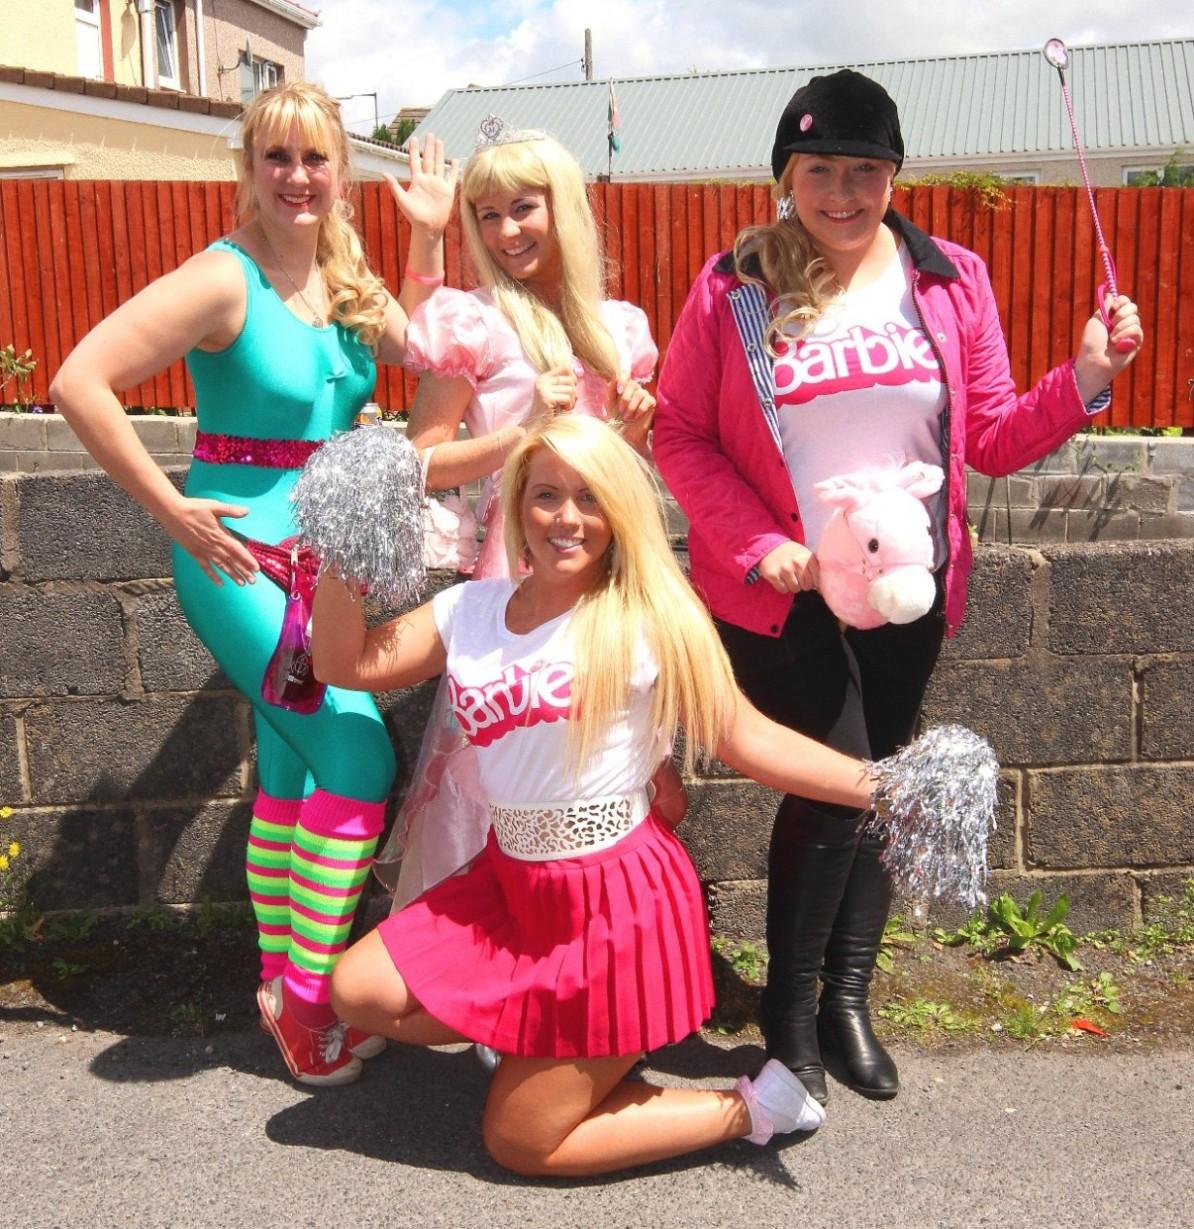 The glamorous Team Barbie crew. Pic: SDD